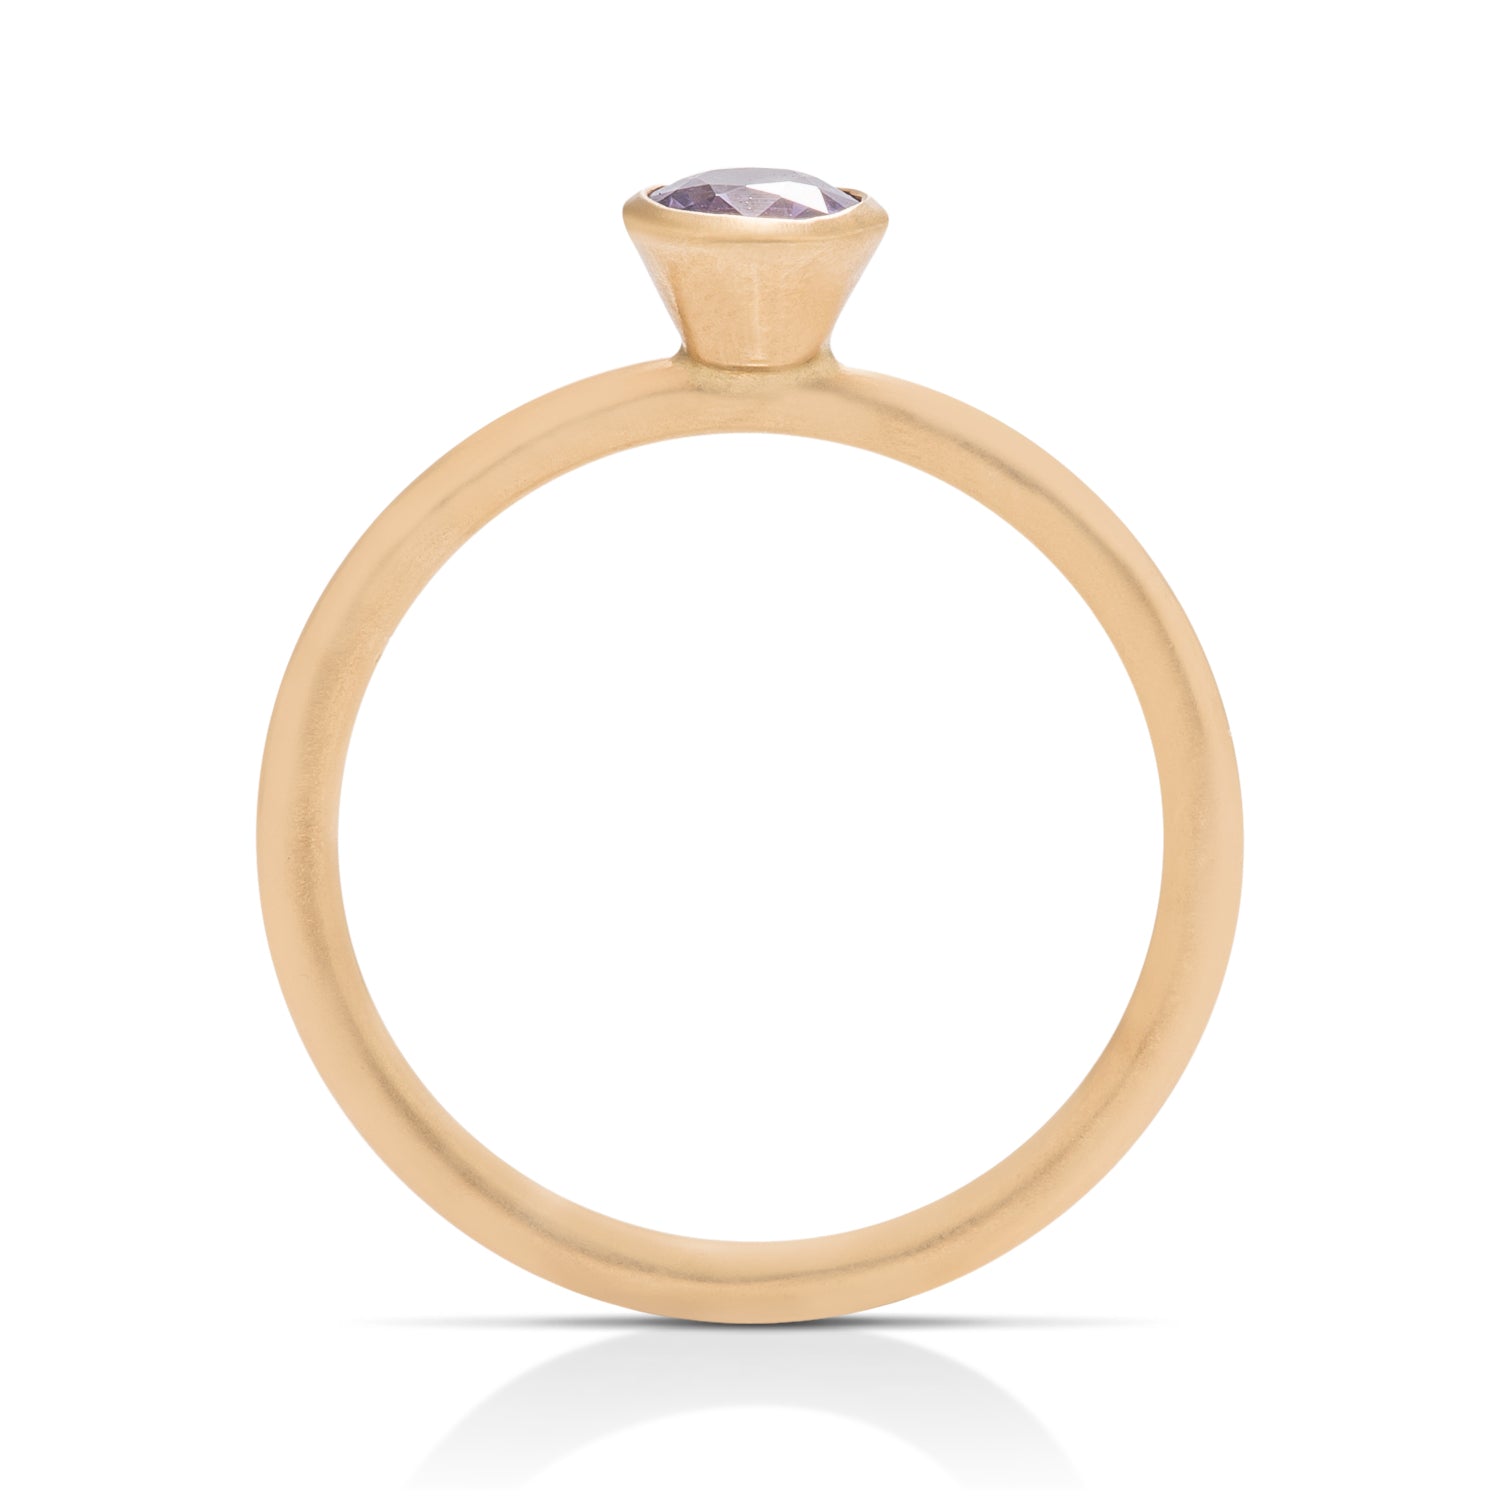 Purple Oval Sapphire Yumdrop Ring - Charles Koll Jewellers